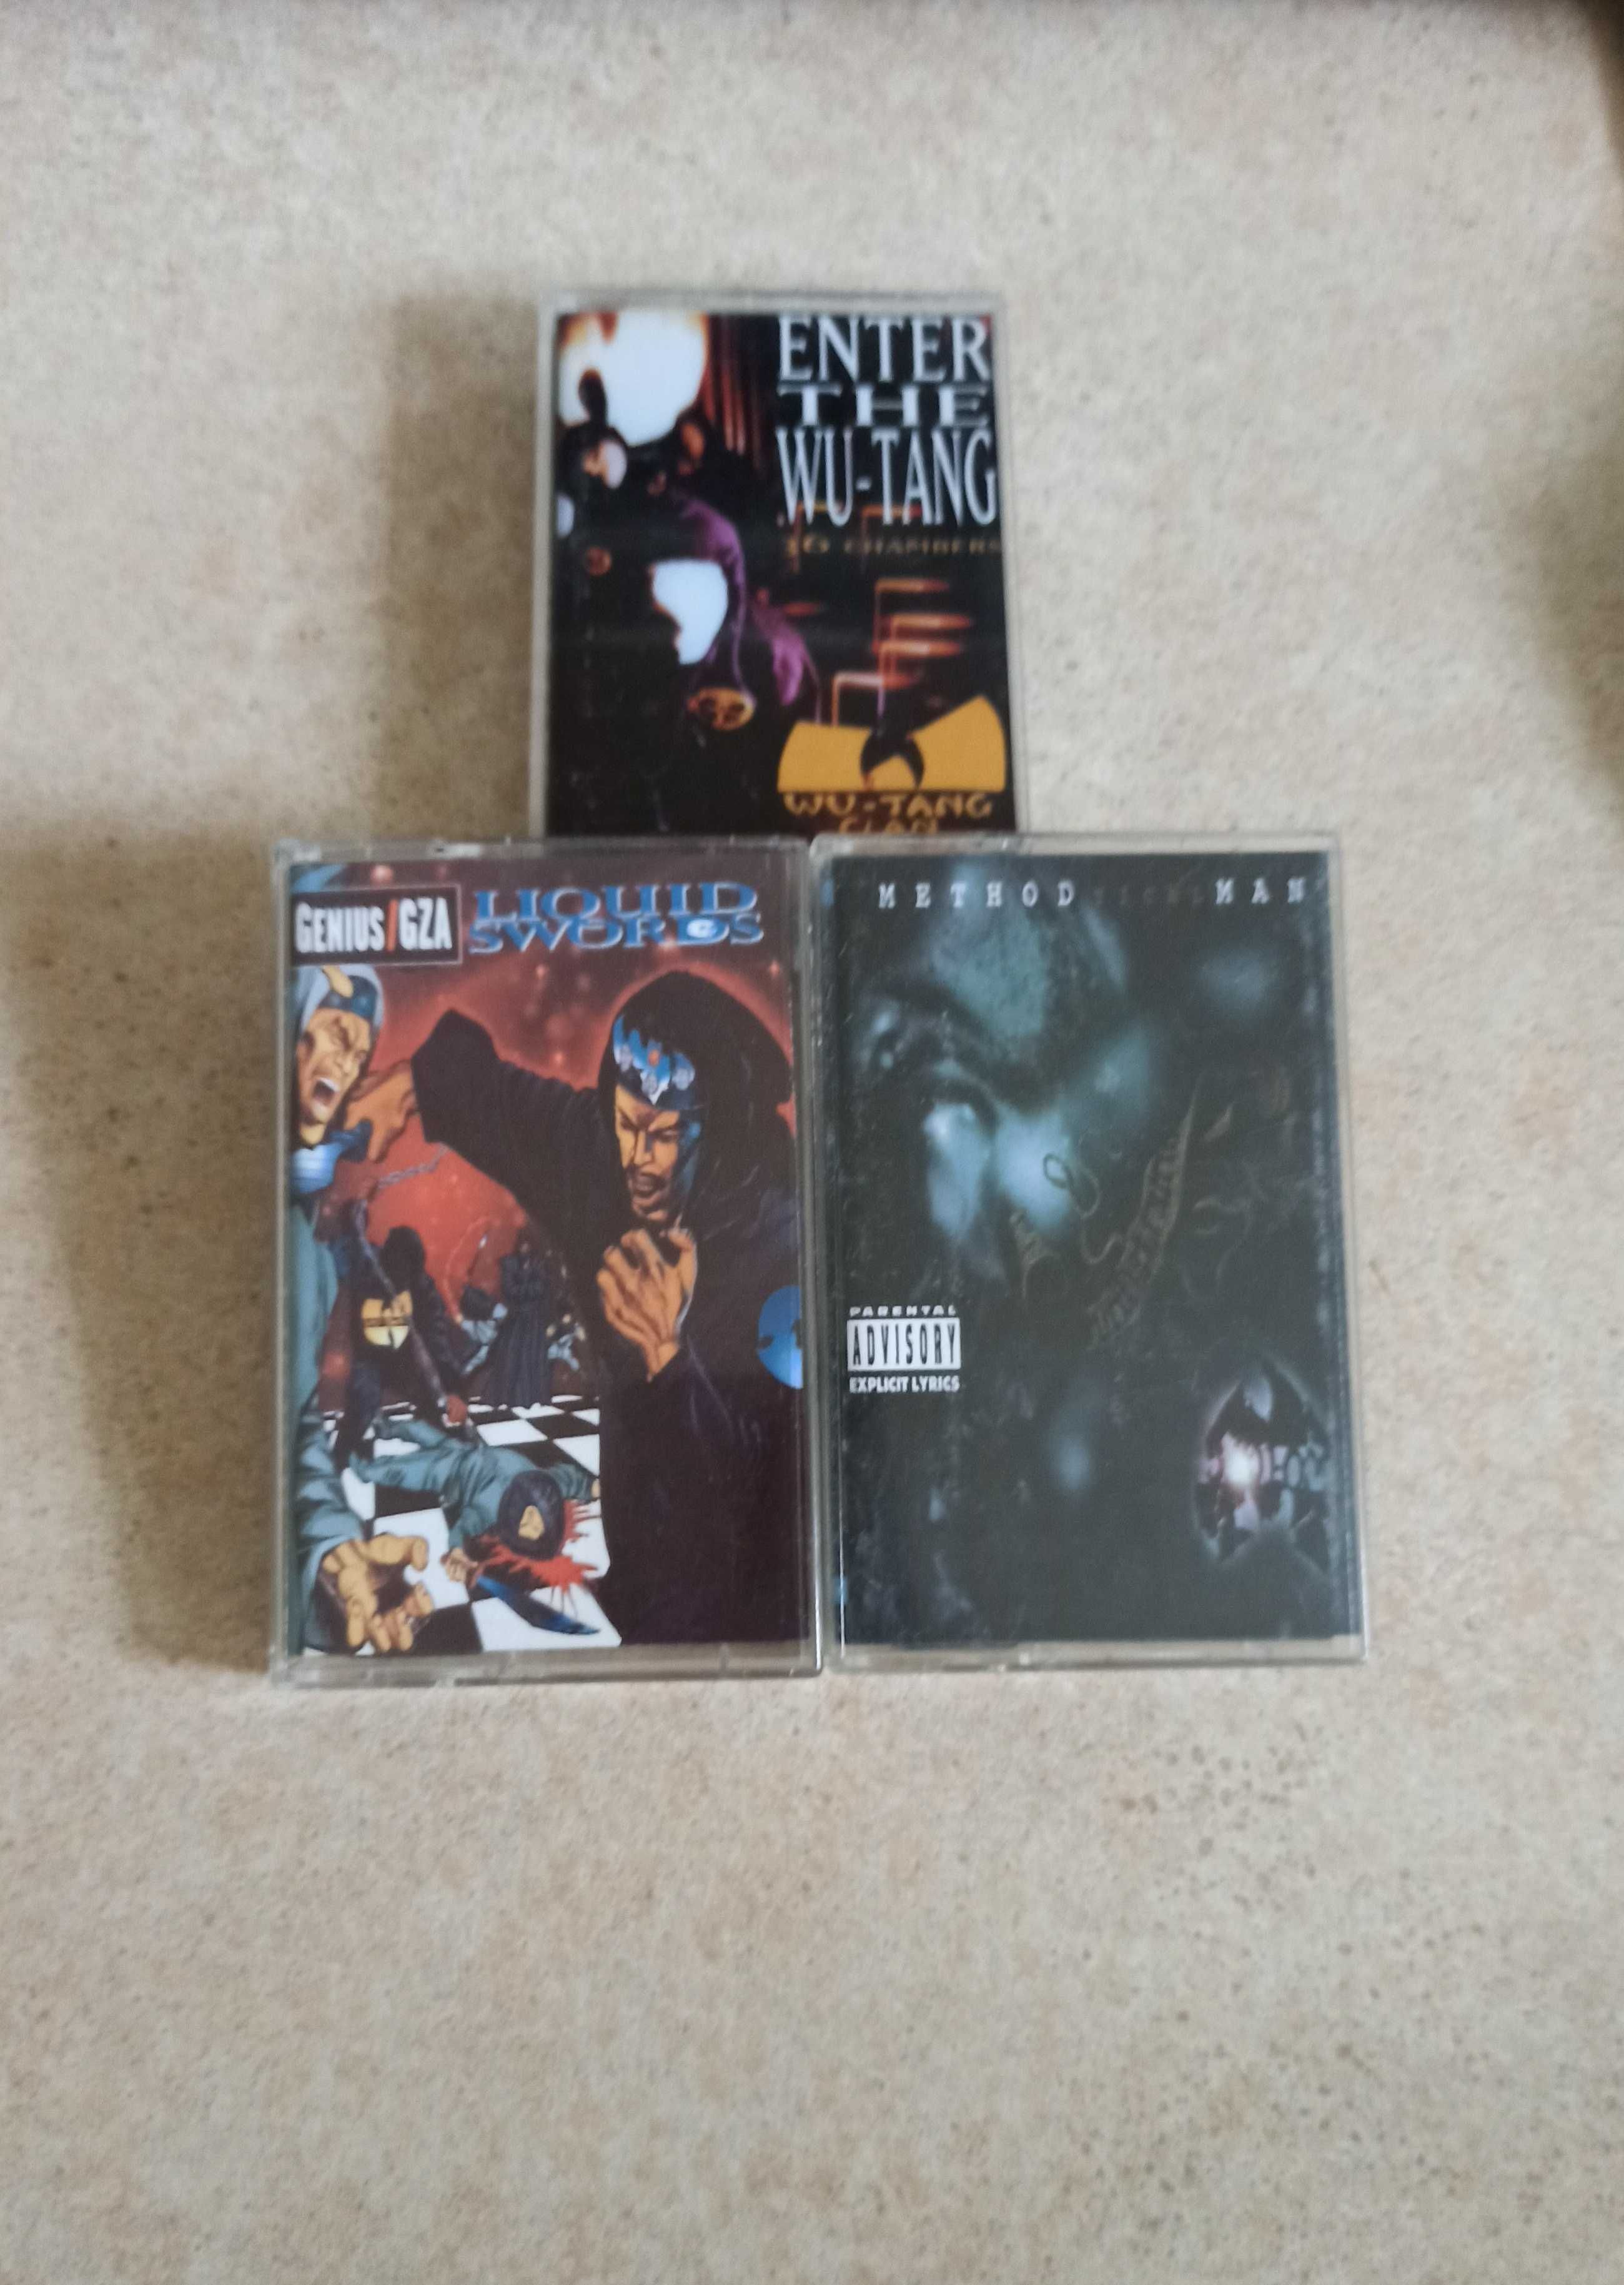 WU-Tang fam на кассетах -  GZA (Genius), WU-Tang Clan, Method man